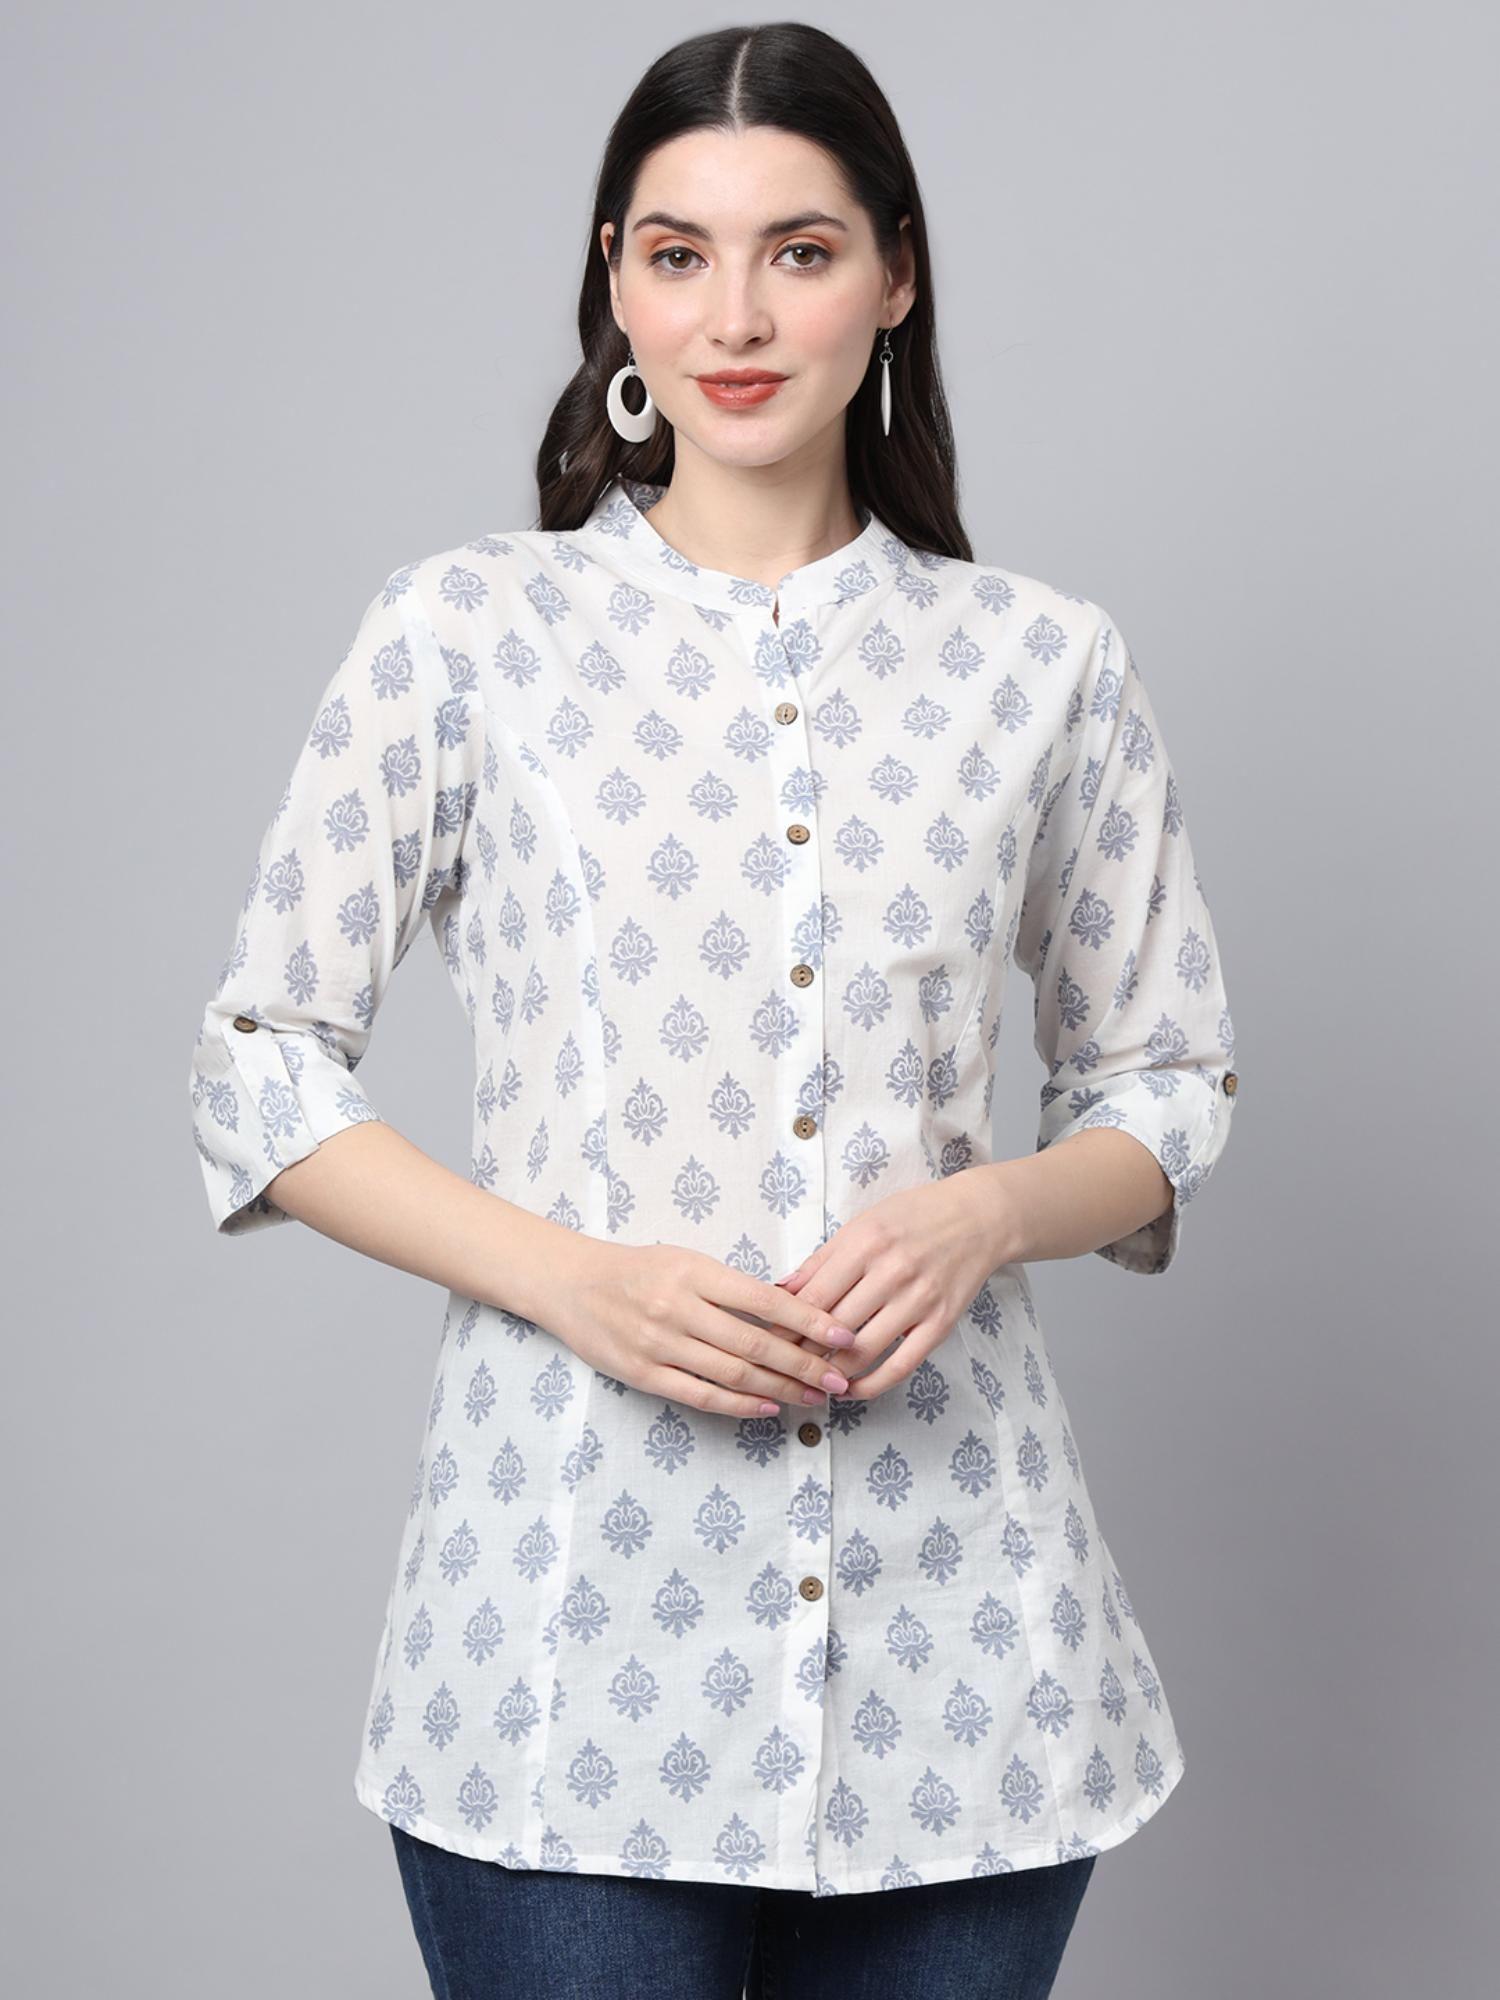 white cotton floral print shirt style top